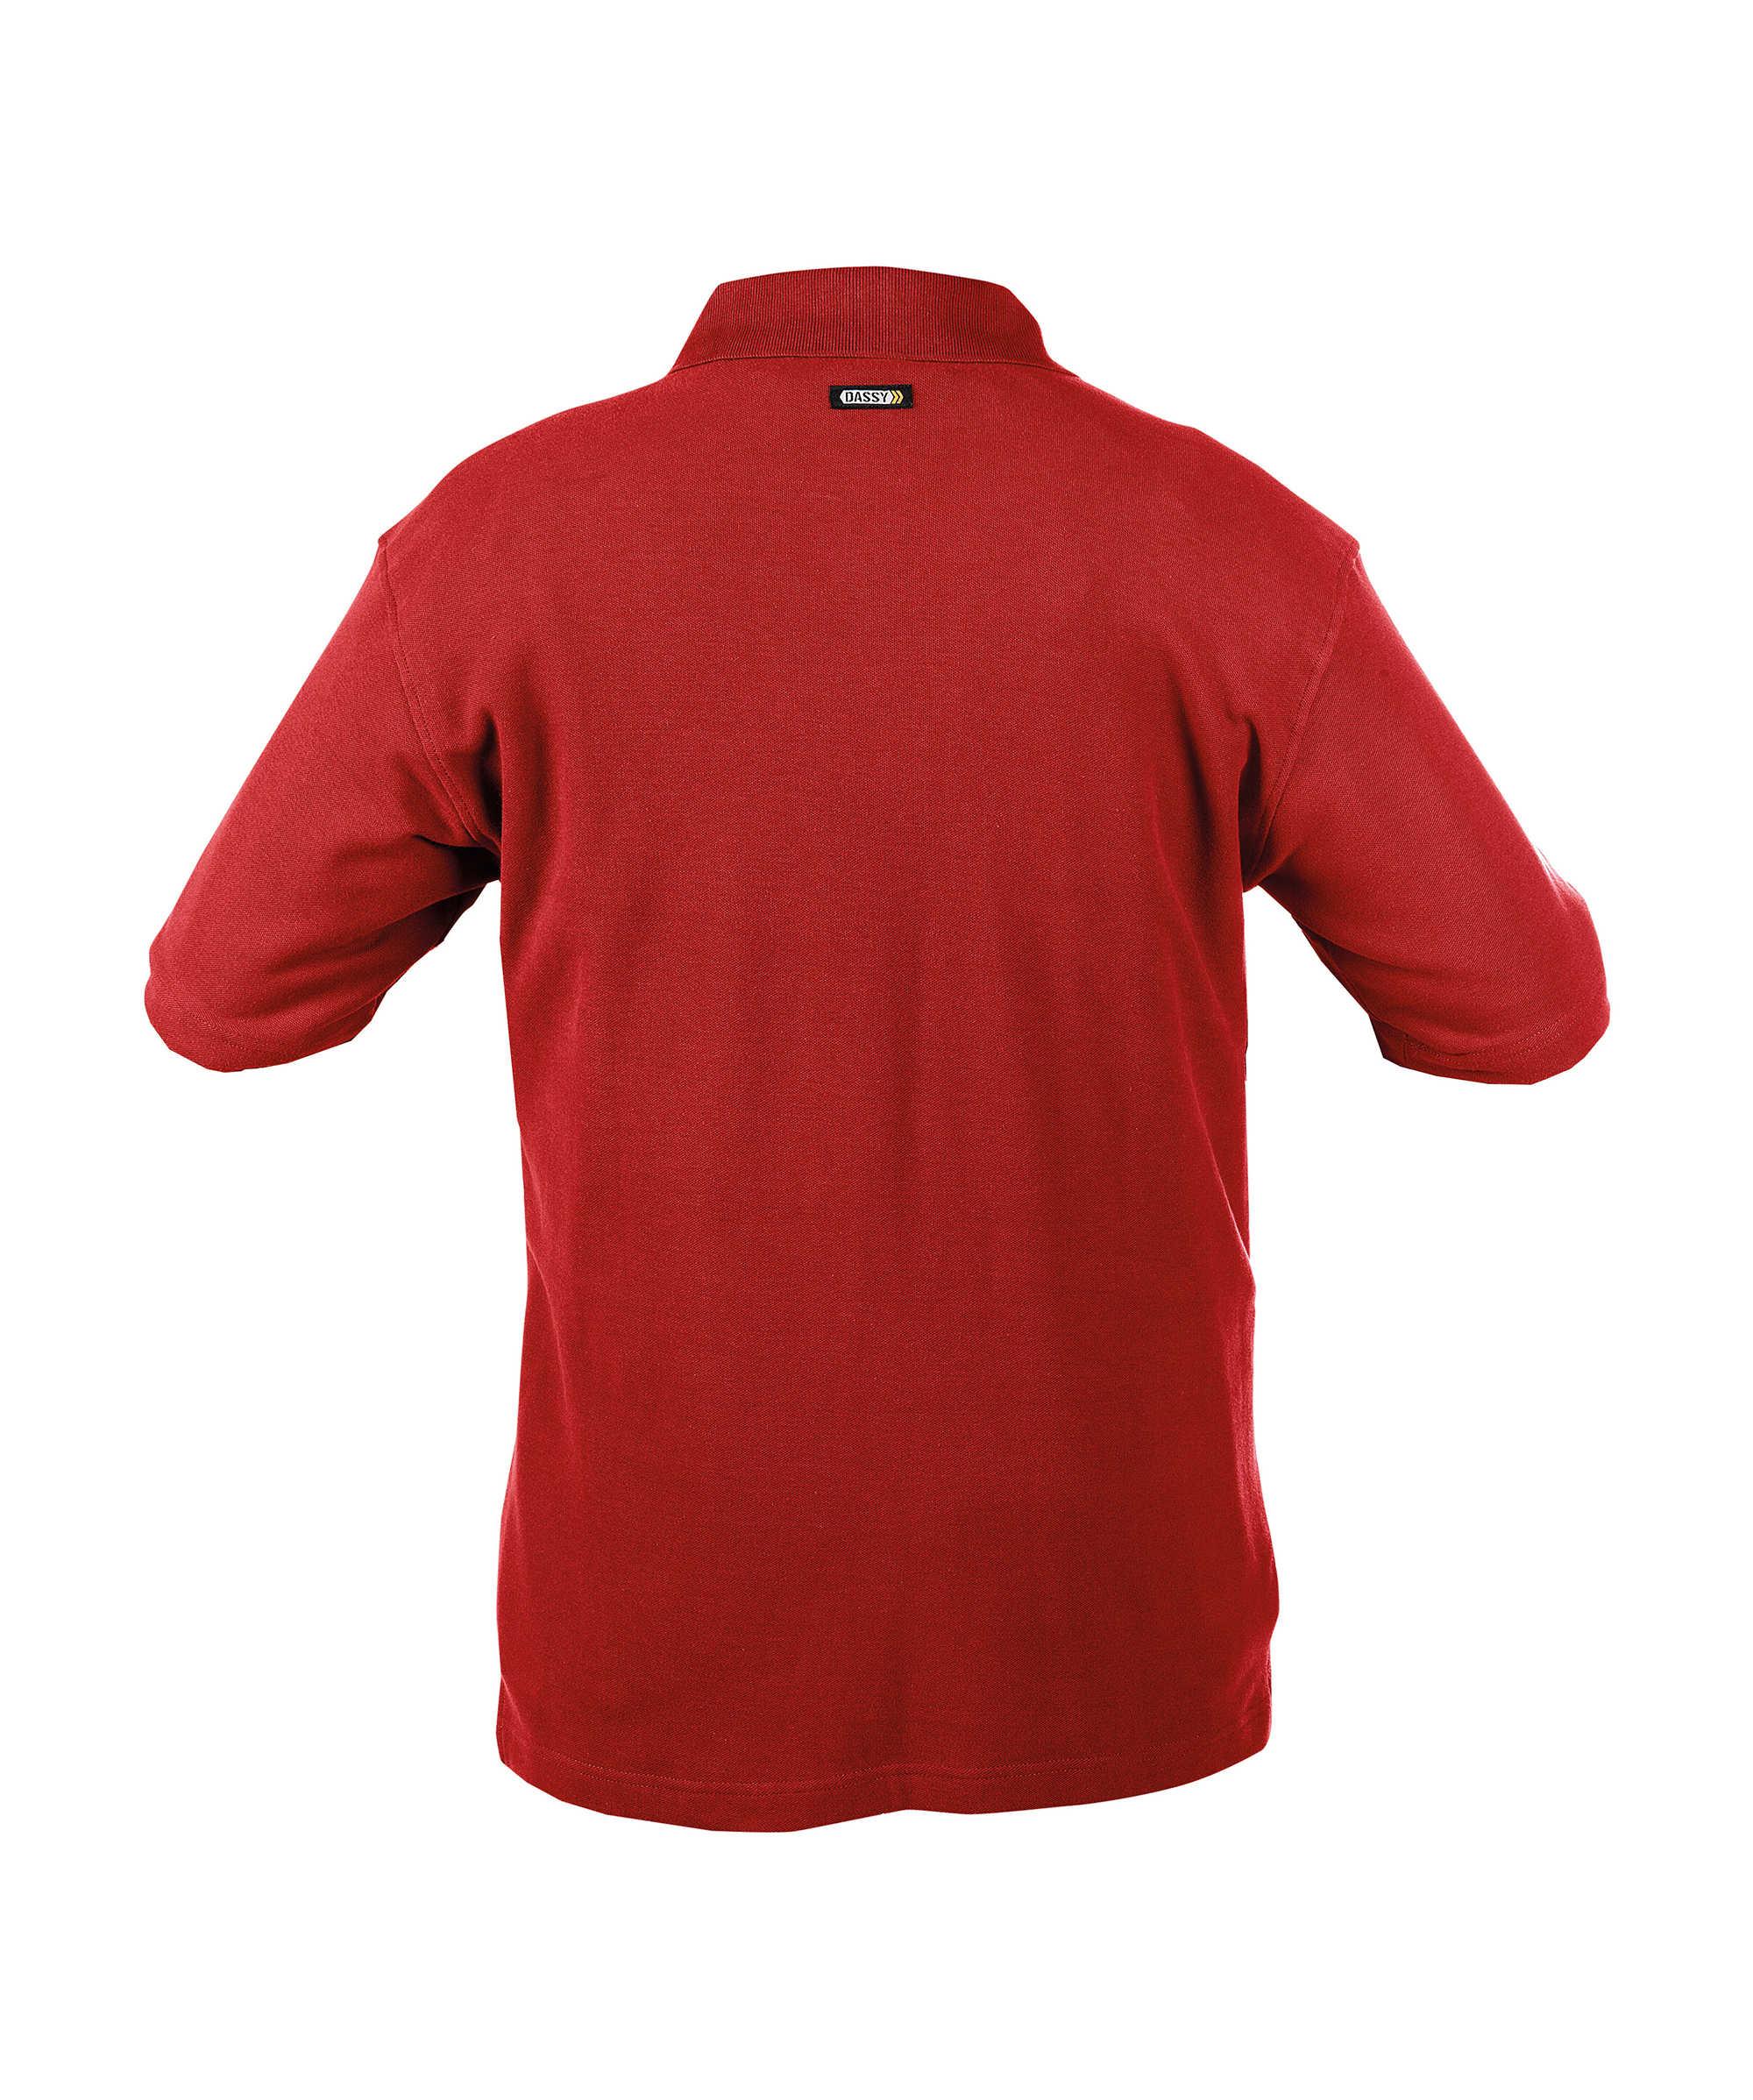 leon_polo-shirt_red_back.jpg